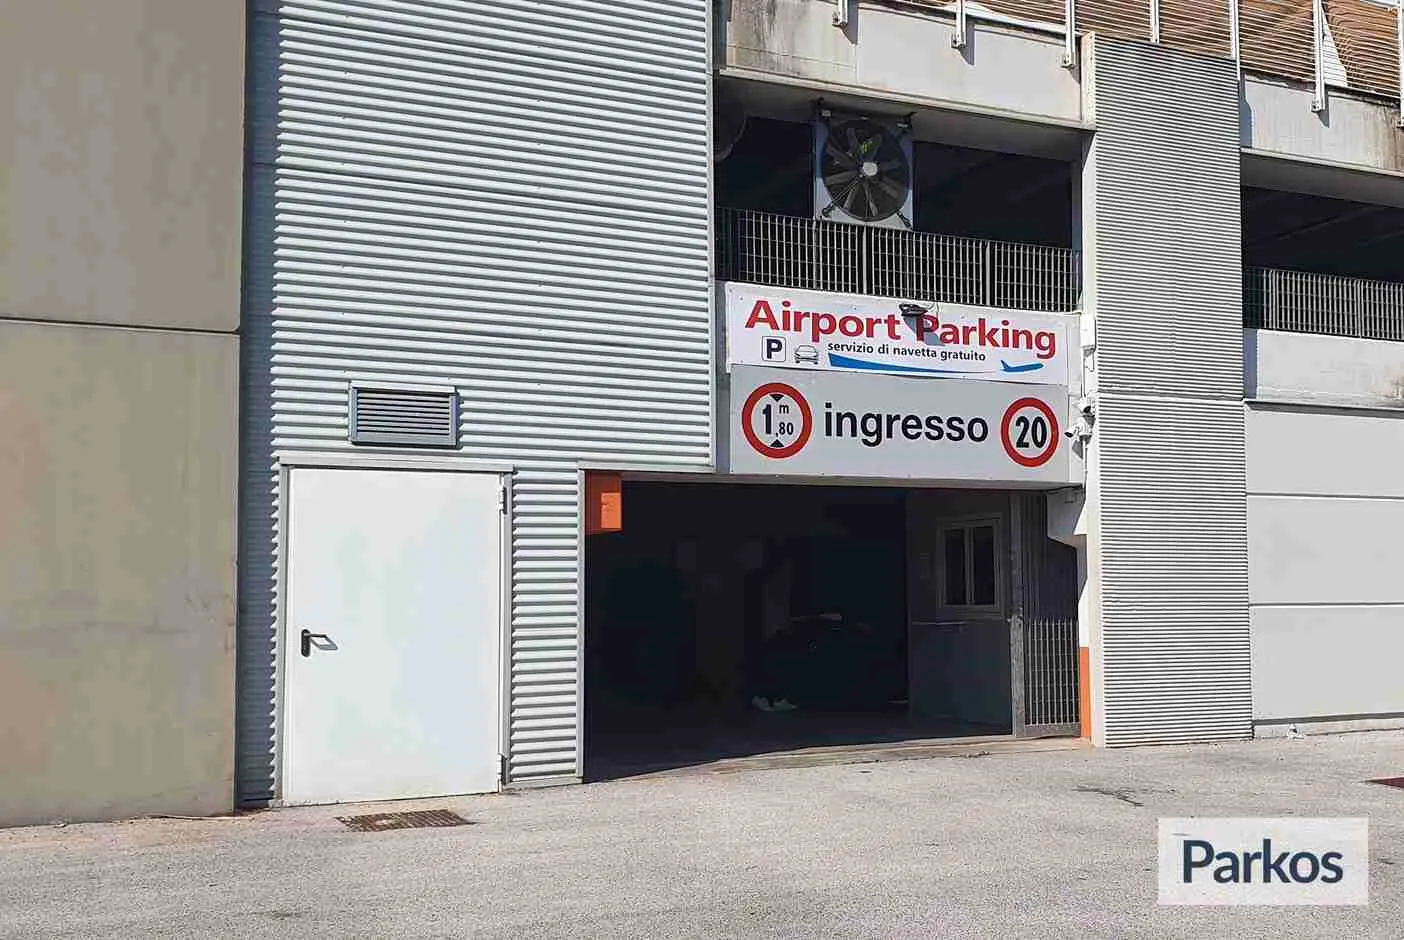 Airport Parking Bari (Paga online) - Airport Parking Bari - picture 1